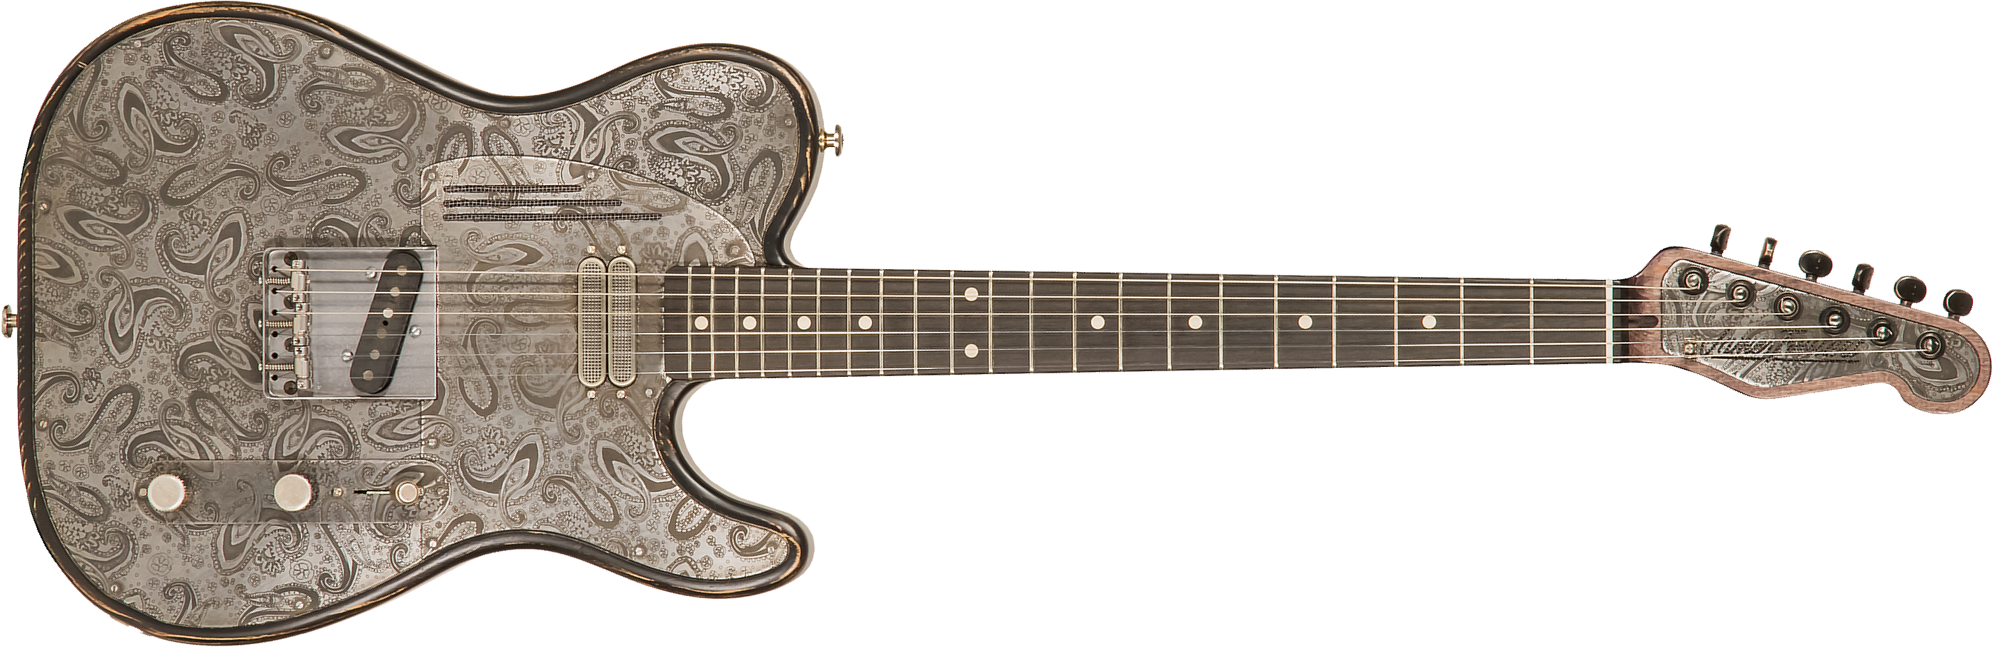 James Trussart Steeltopcaster Sh Ht Eb #21135 - Antique Silver Paisley - Televorm elektrische gitaar - Main picture